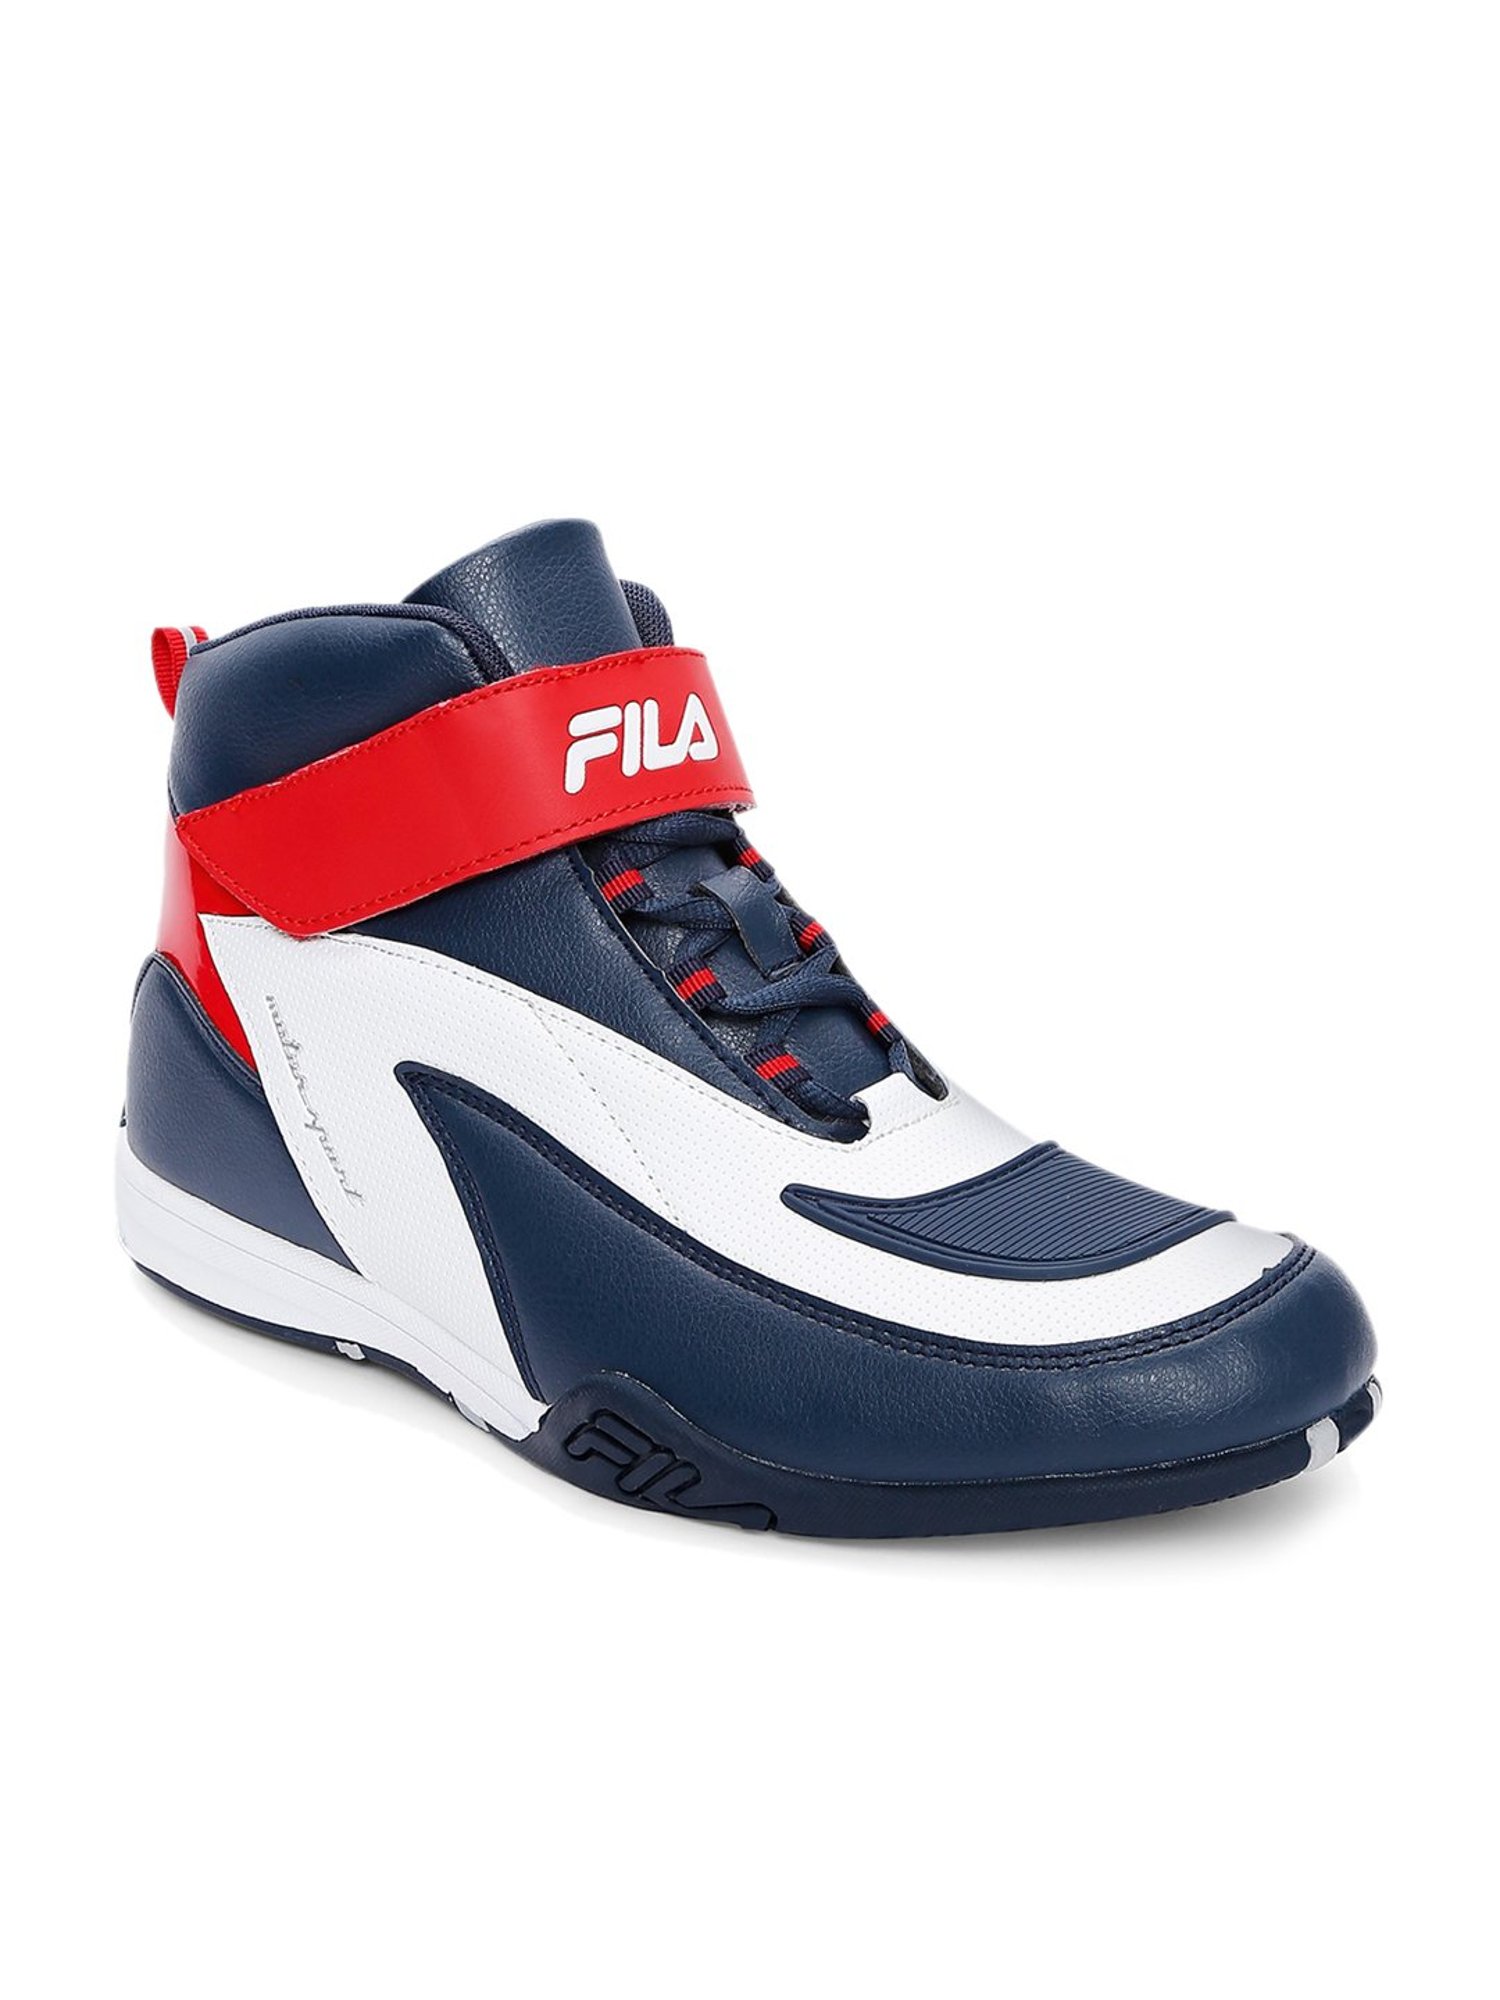 fila wrestling shoes